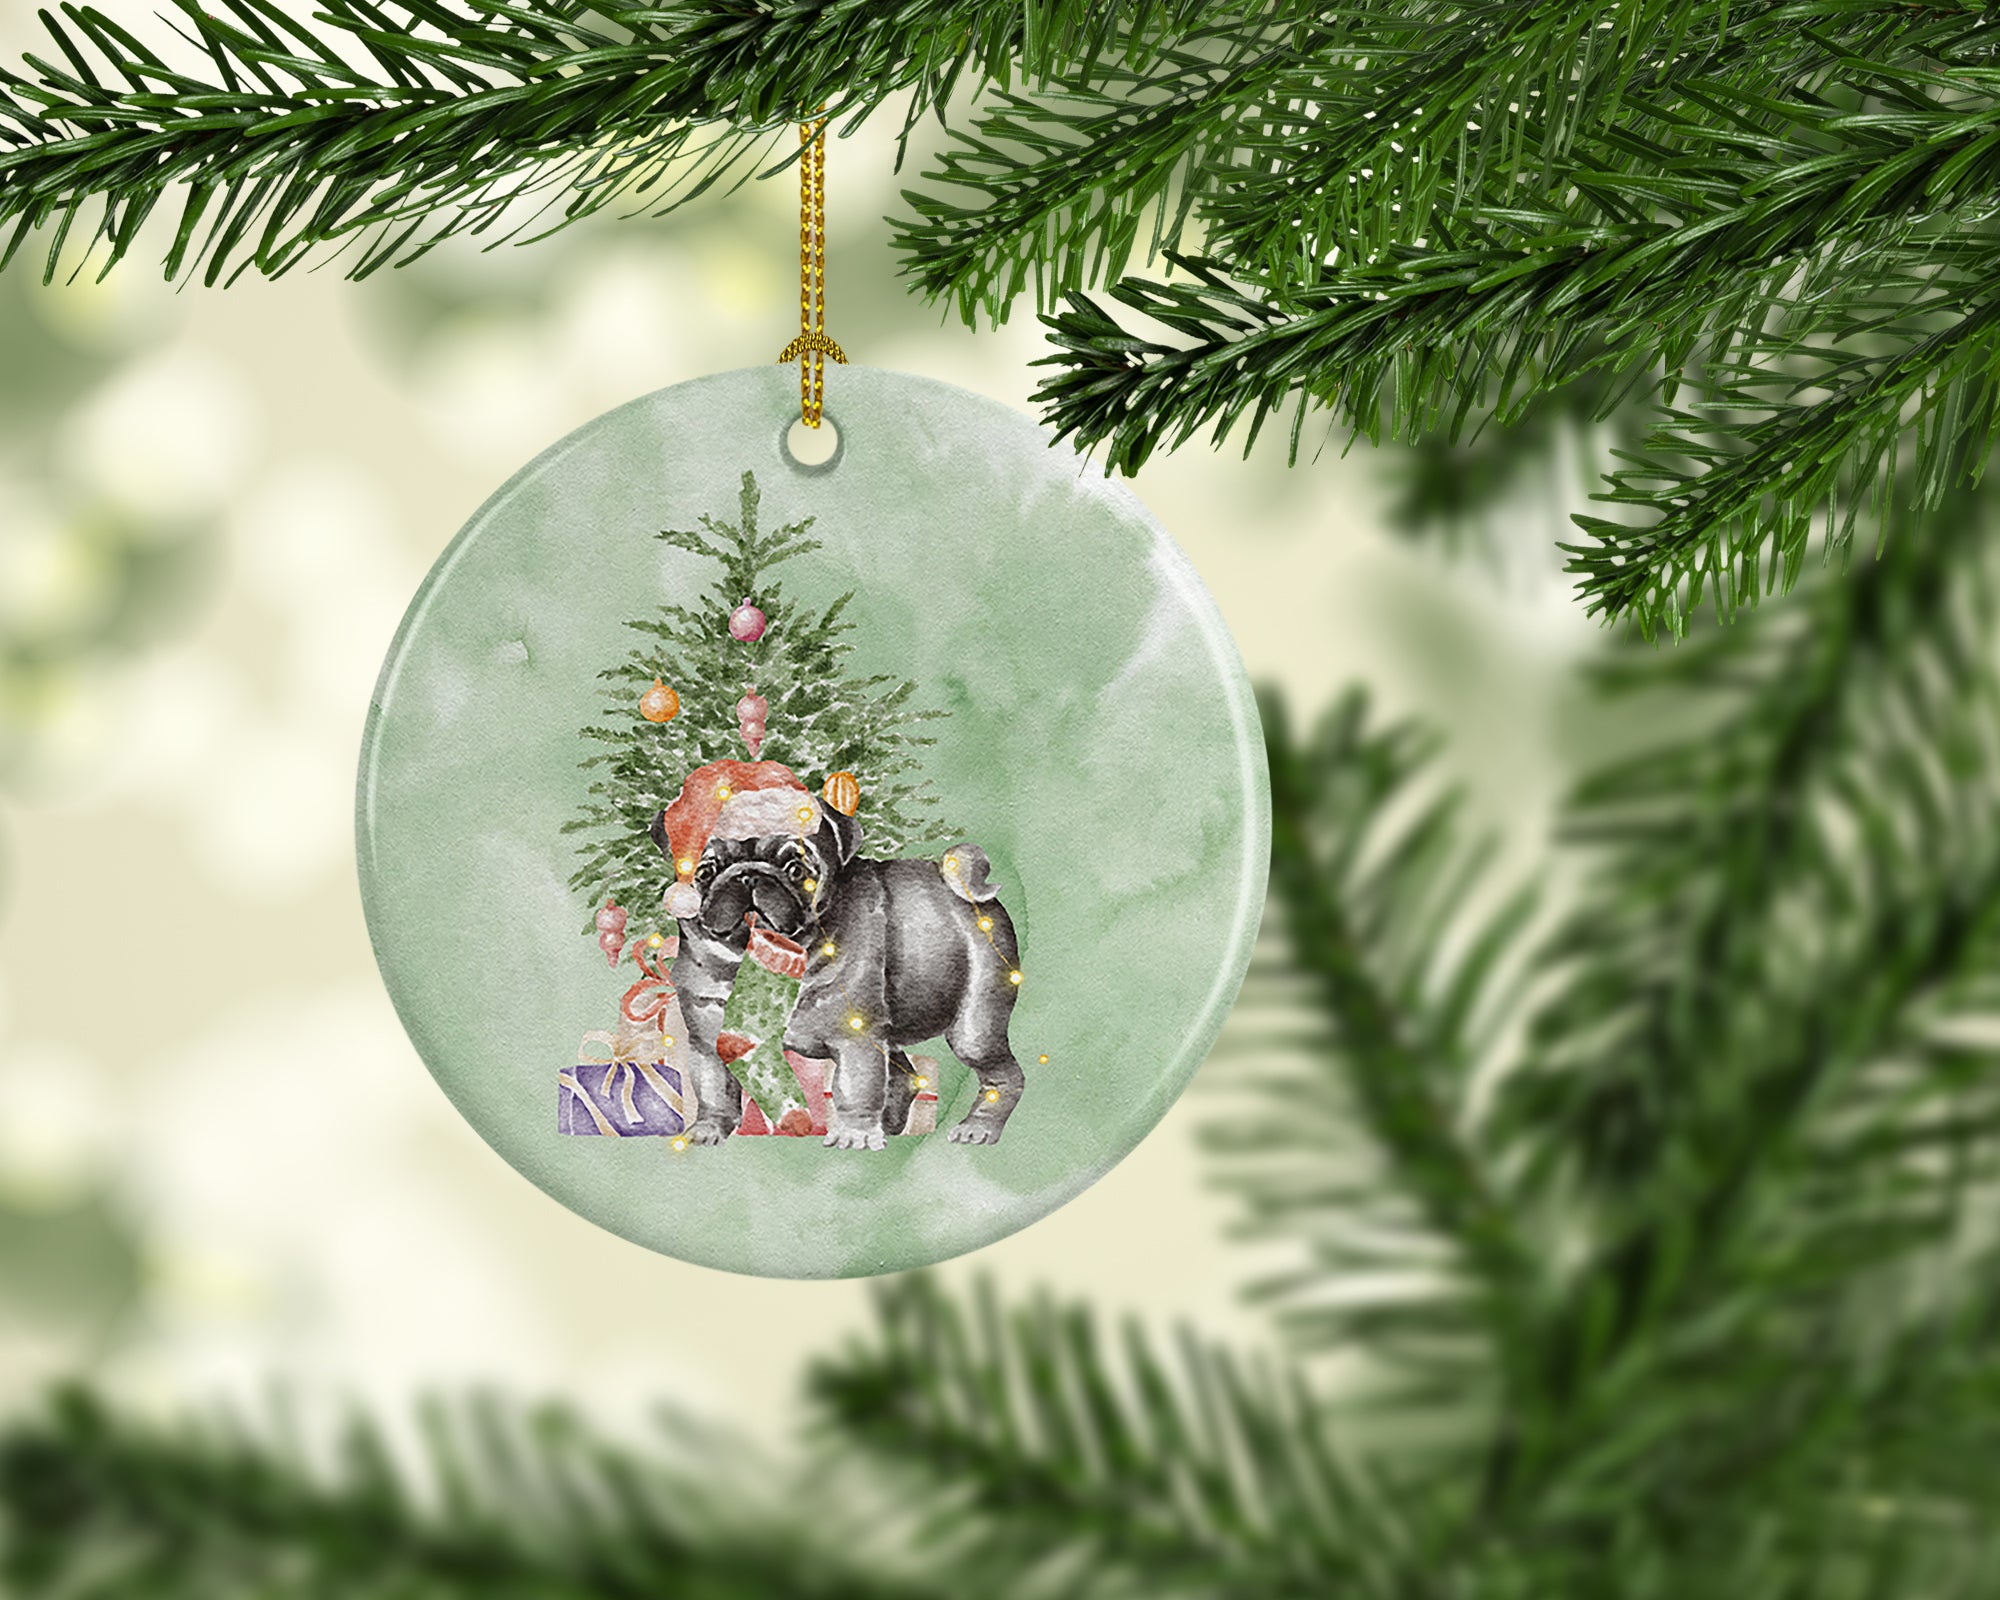 Buy this Christmas Black Pug #2 Ceramic Ornament